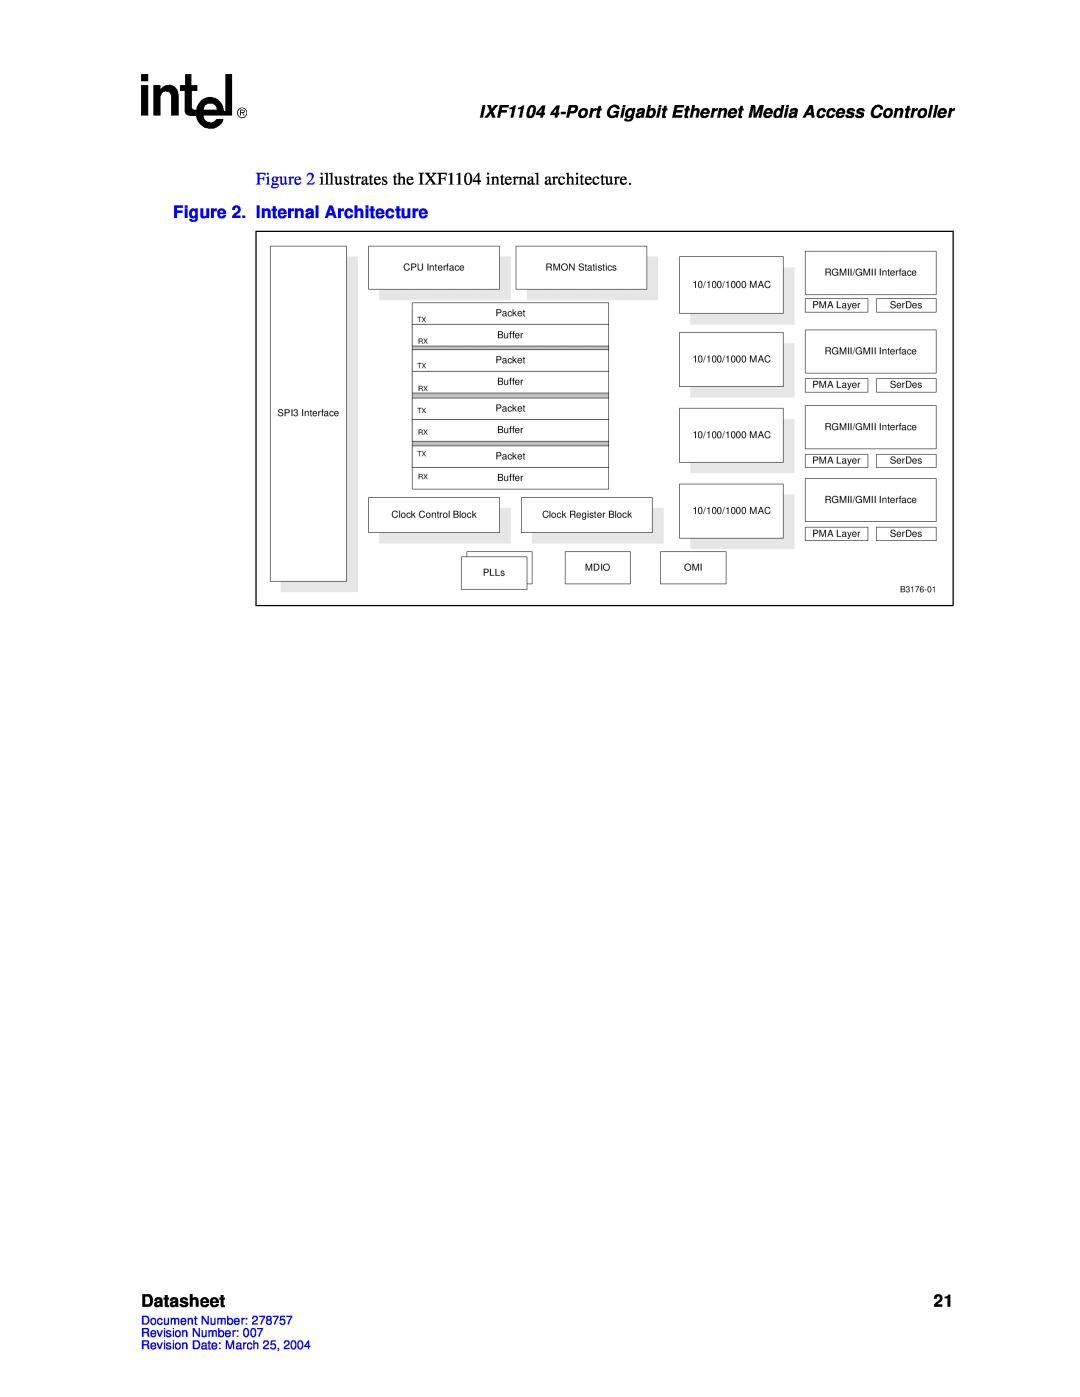 Intel IXF1104 manual Internal Architecture, Datasheet 